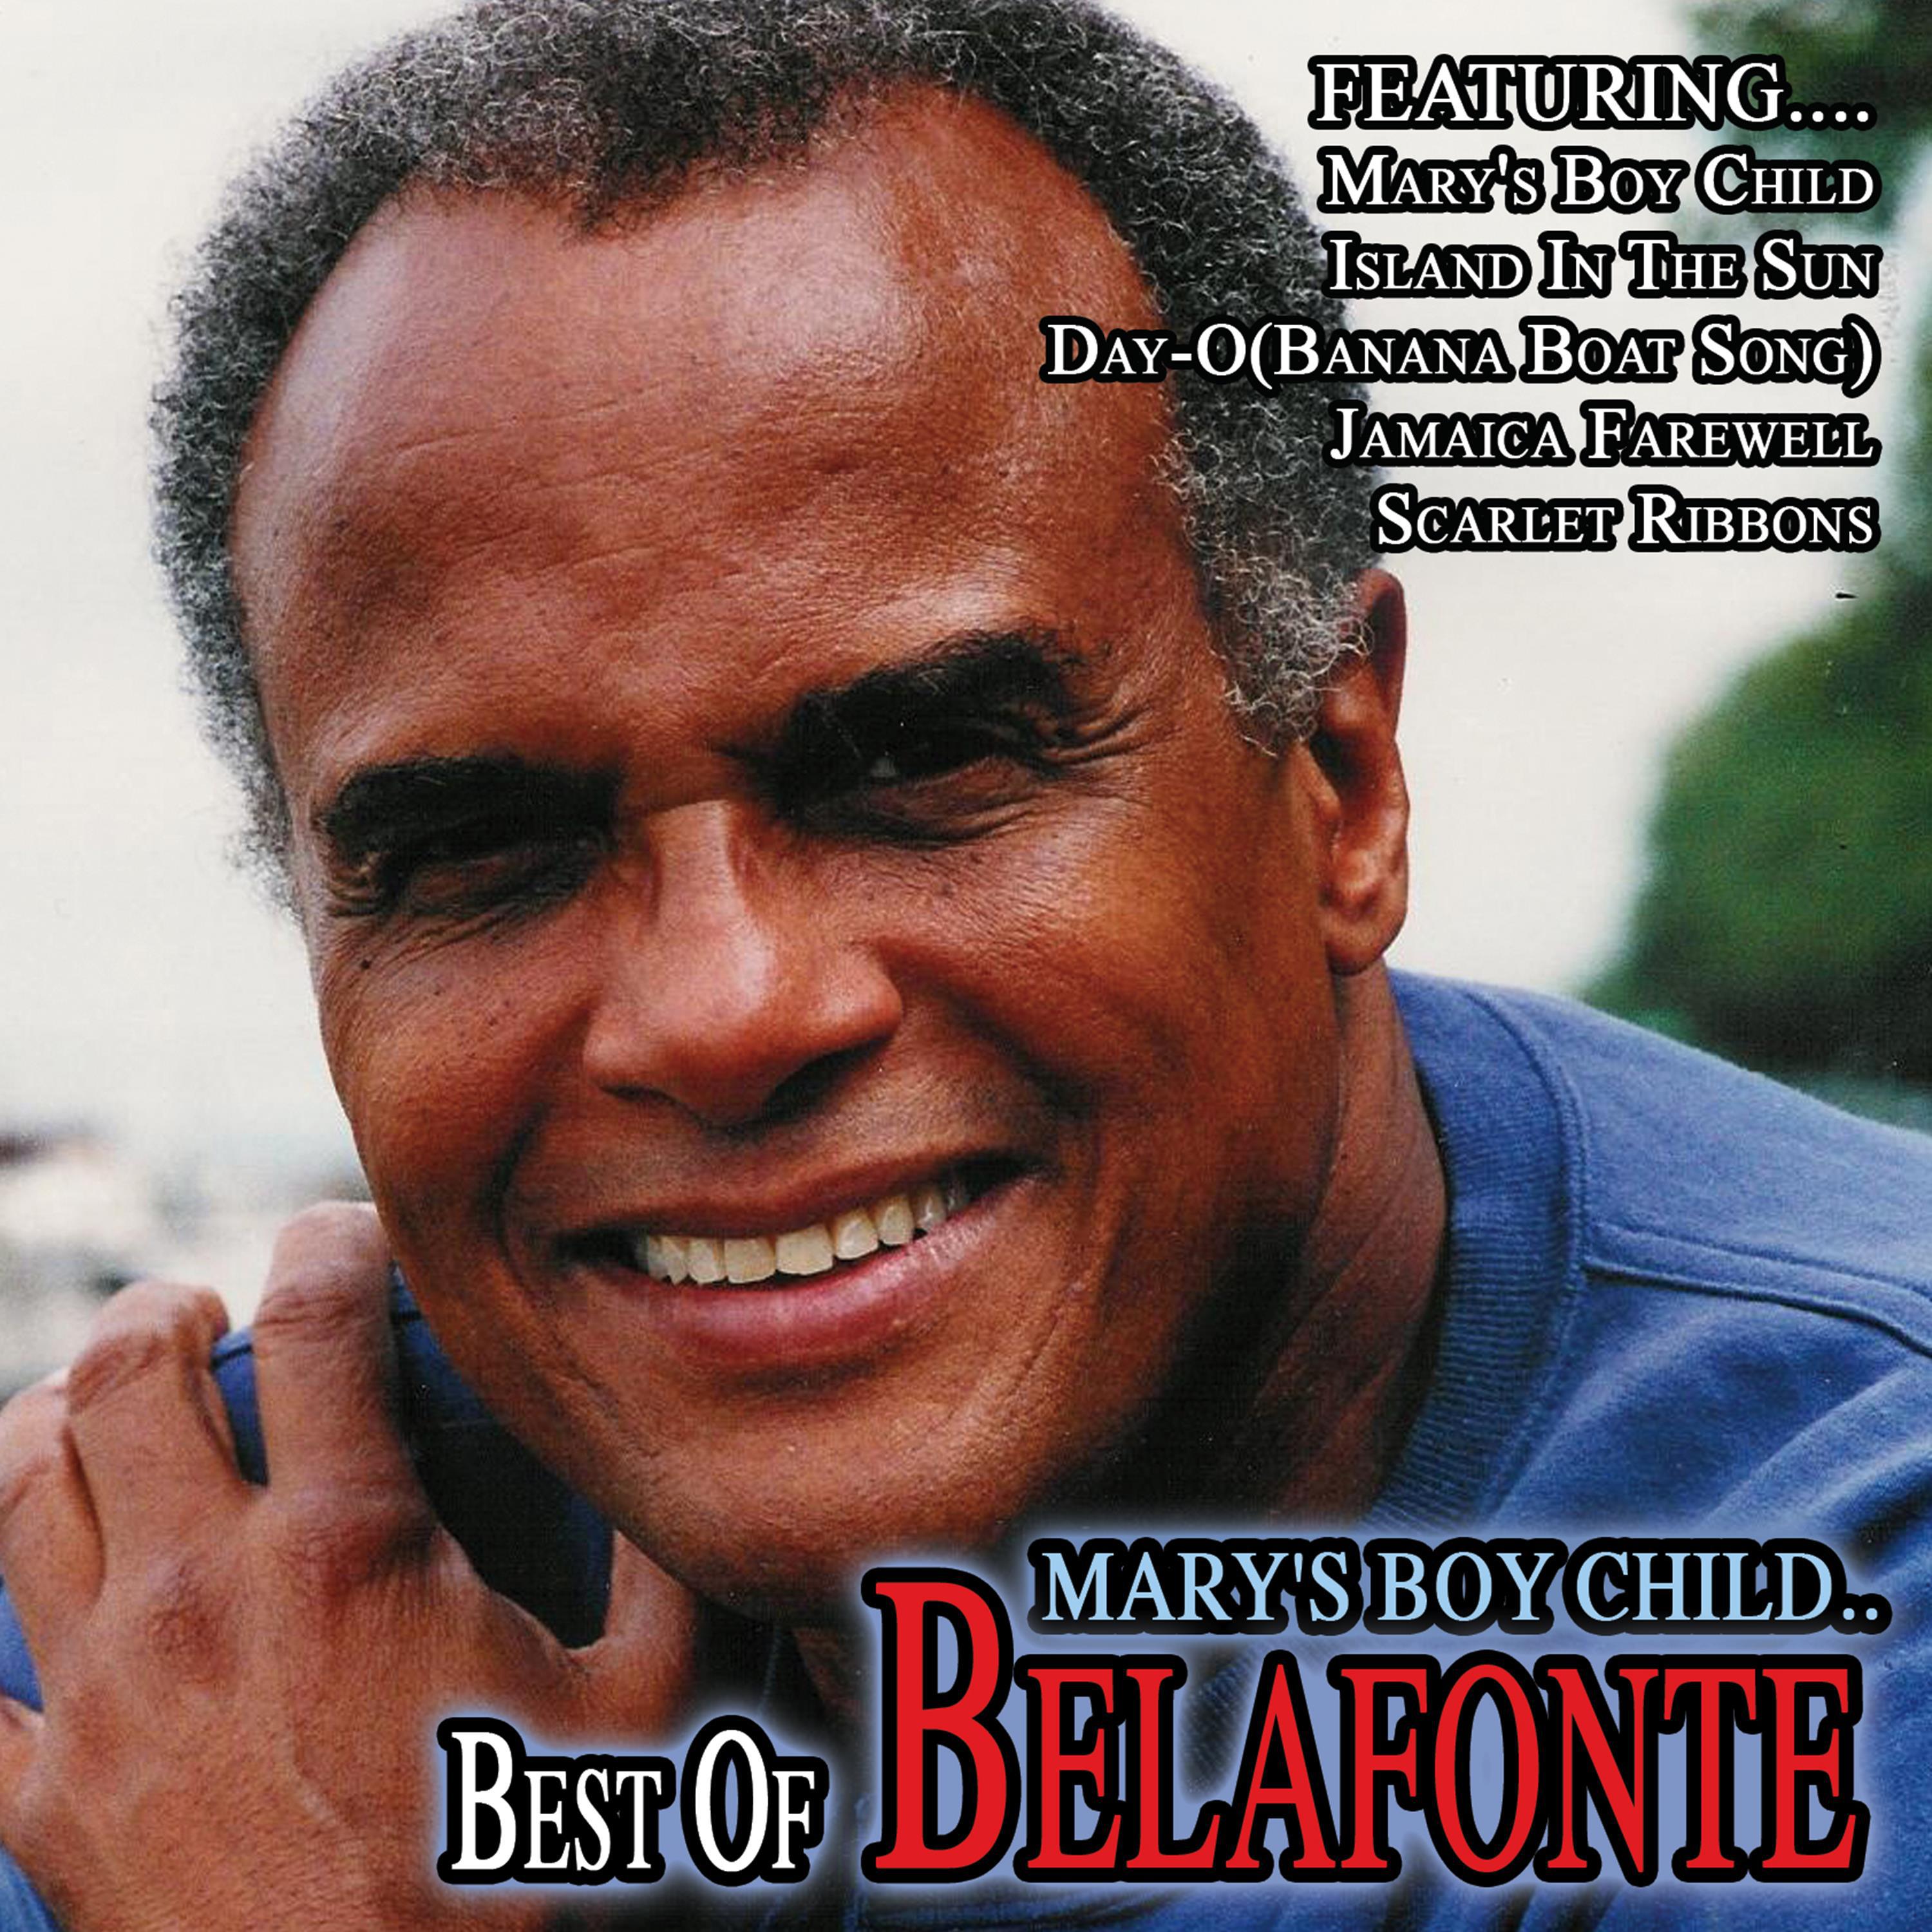 Mary's Boy Child... Best of Belafonte